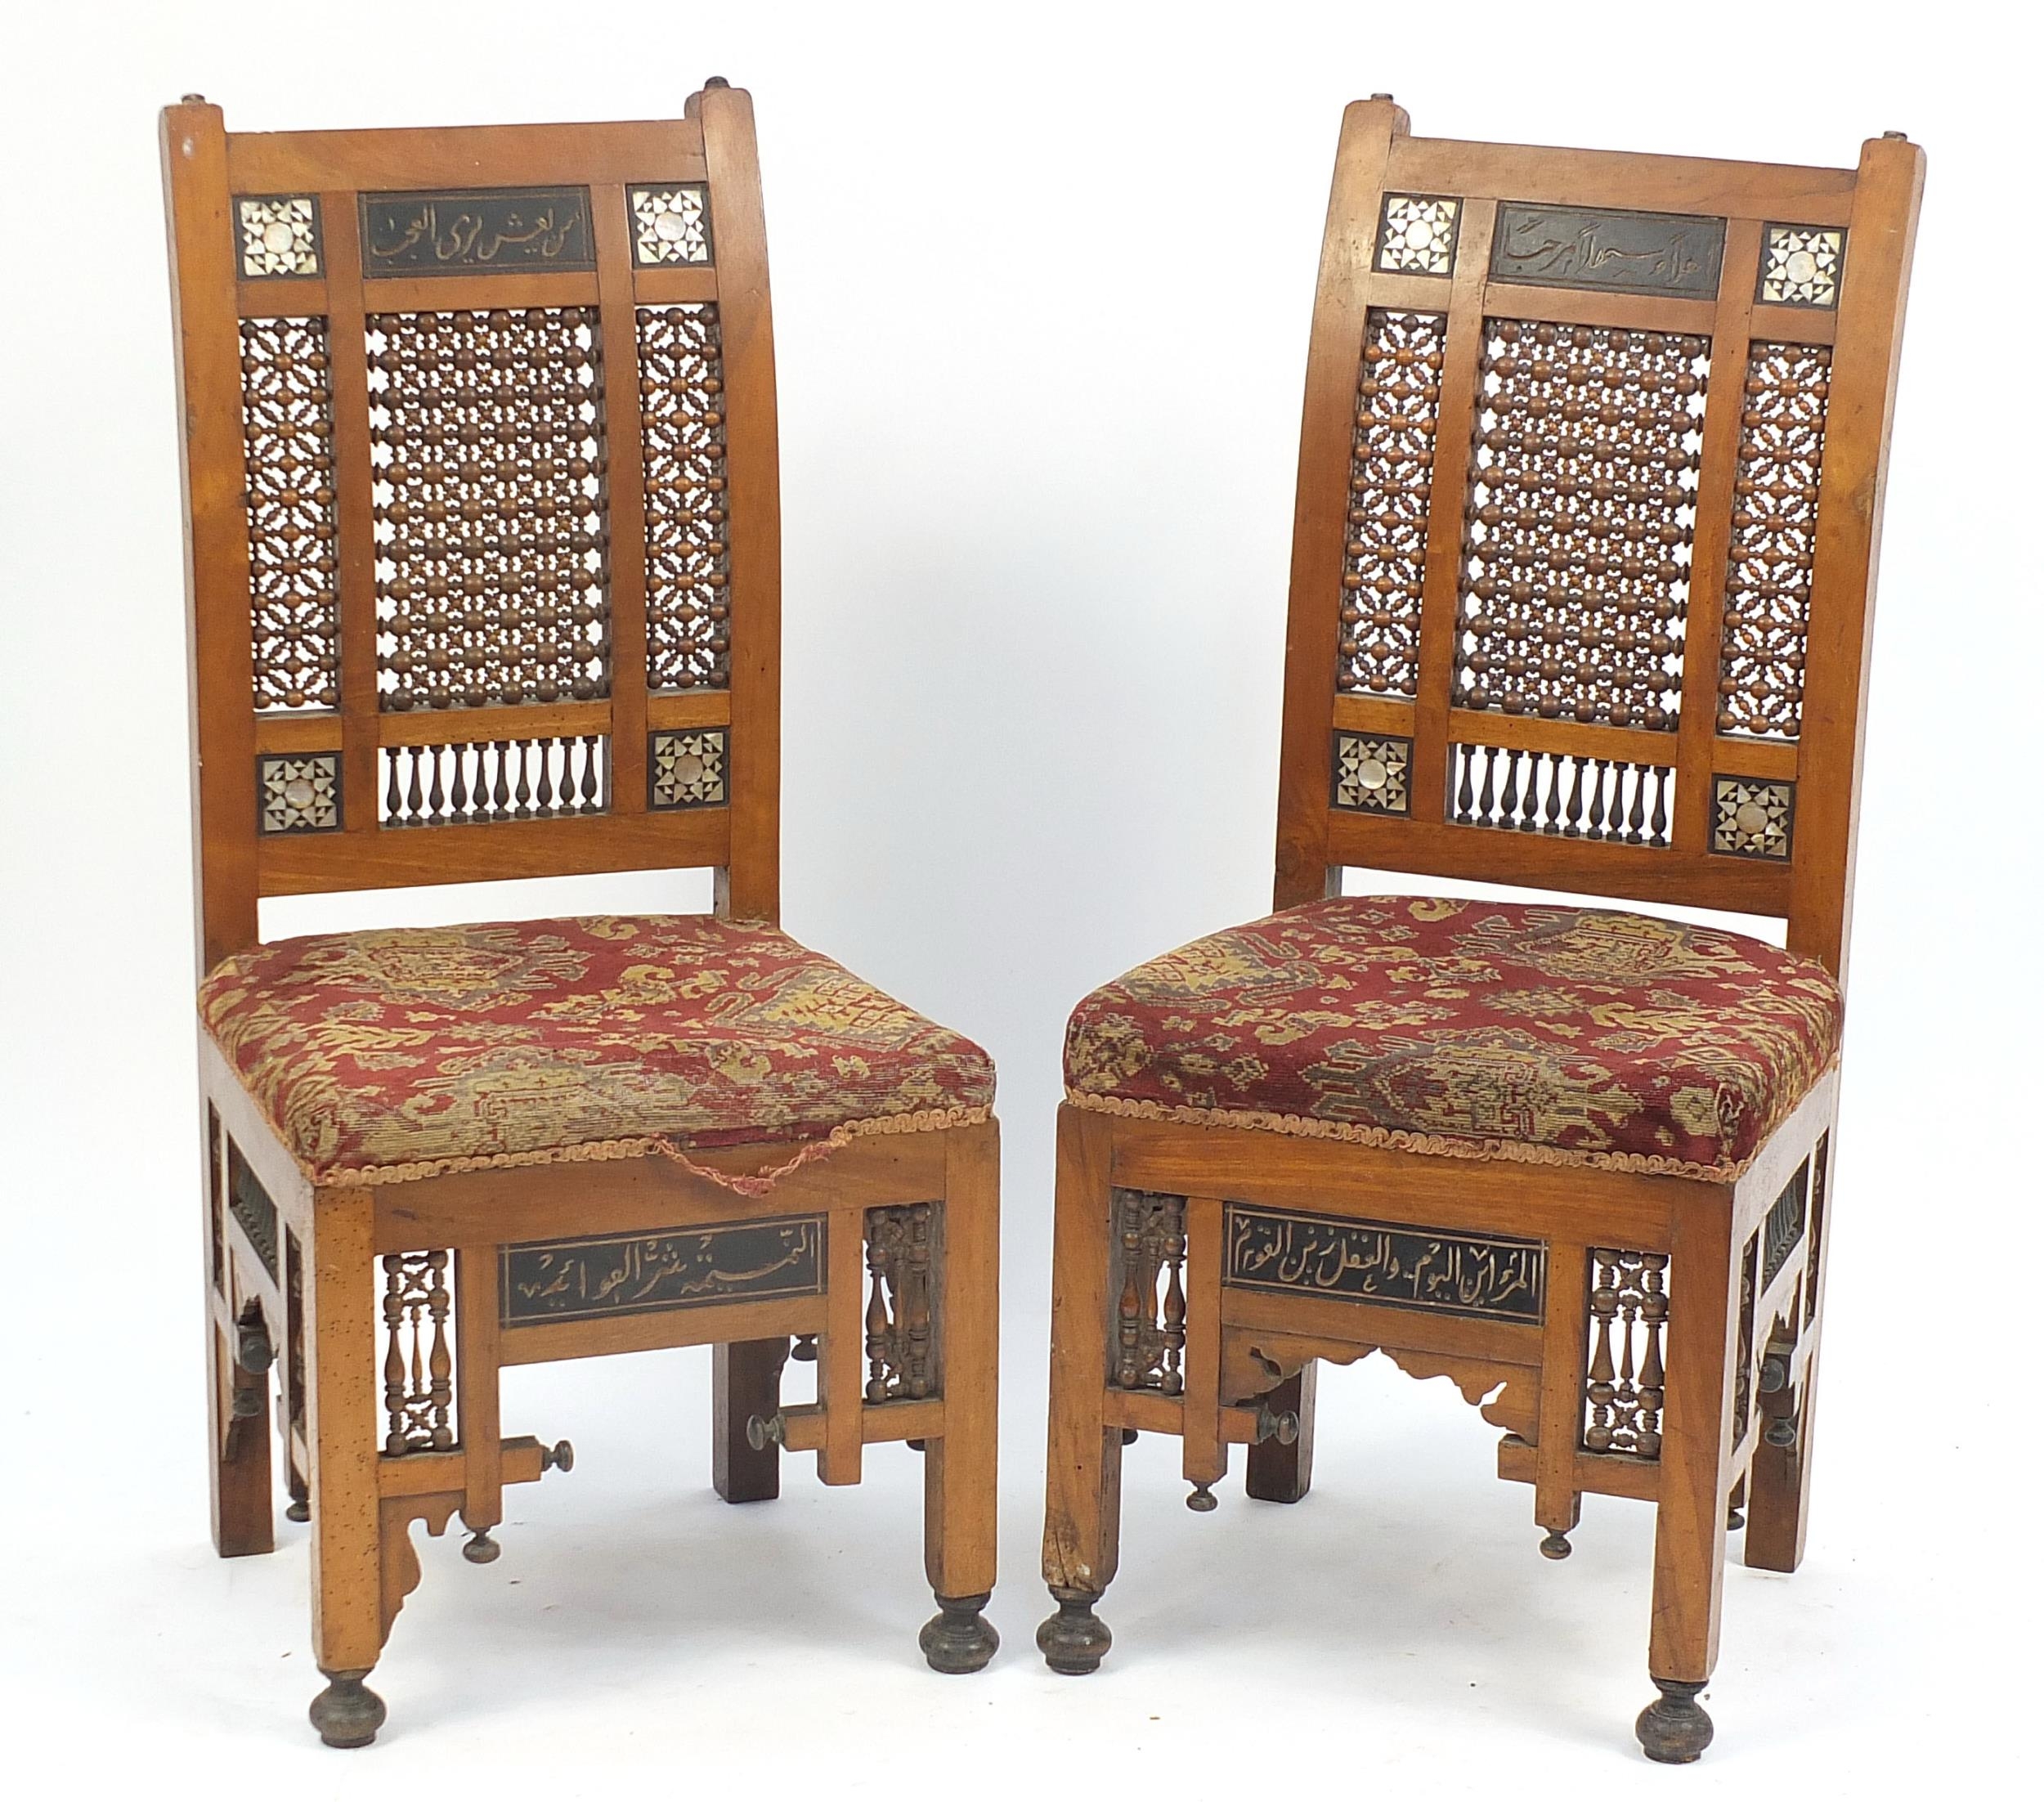 Pair of antique Syrian Moorish design chairs, 97cm high